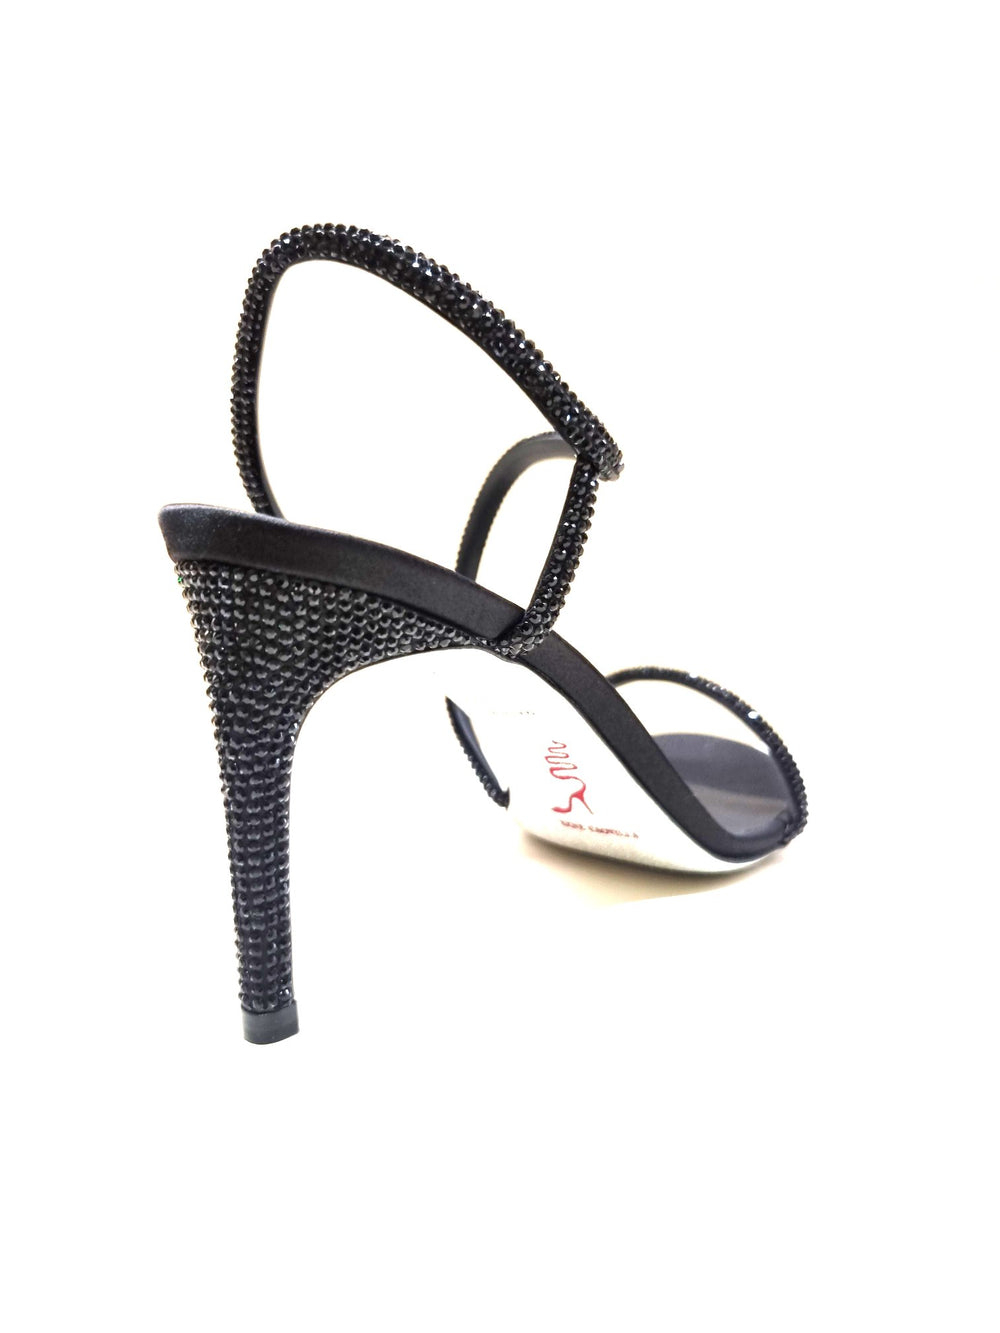 Irini Black Strass Sandals - Rene Caovilla - Liberty Shoes Australia